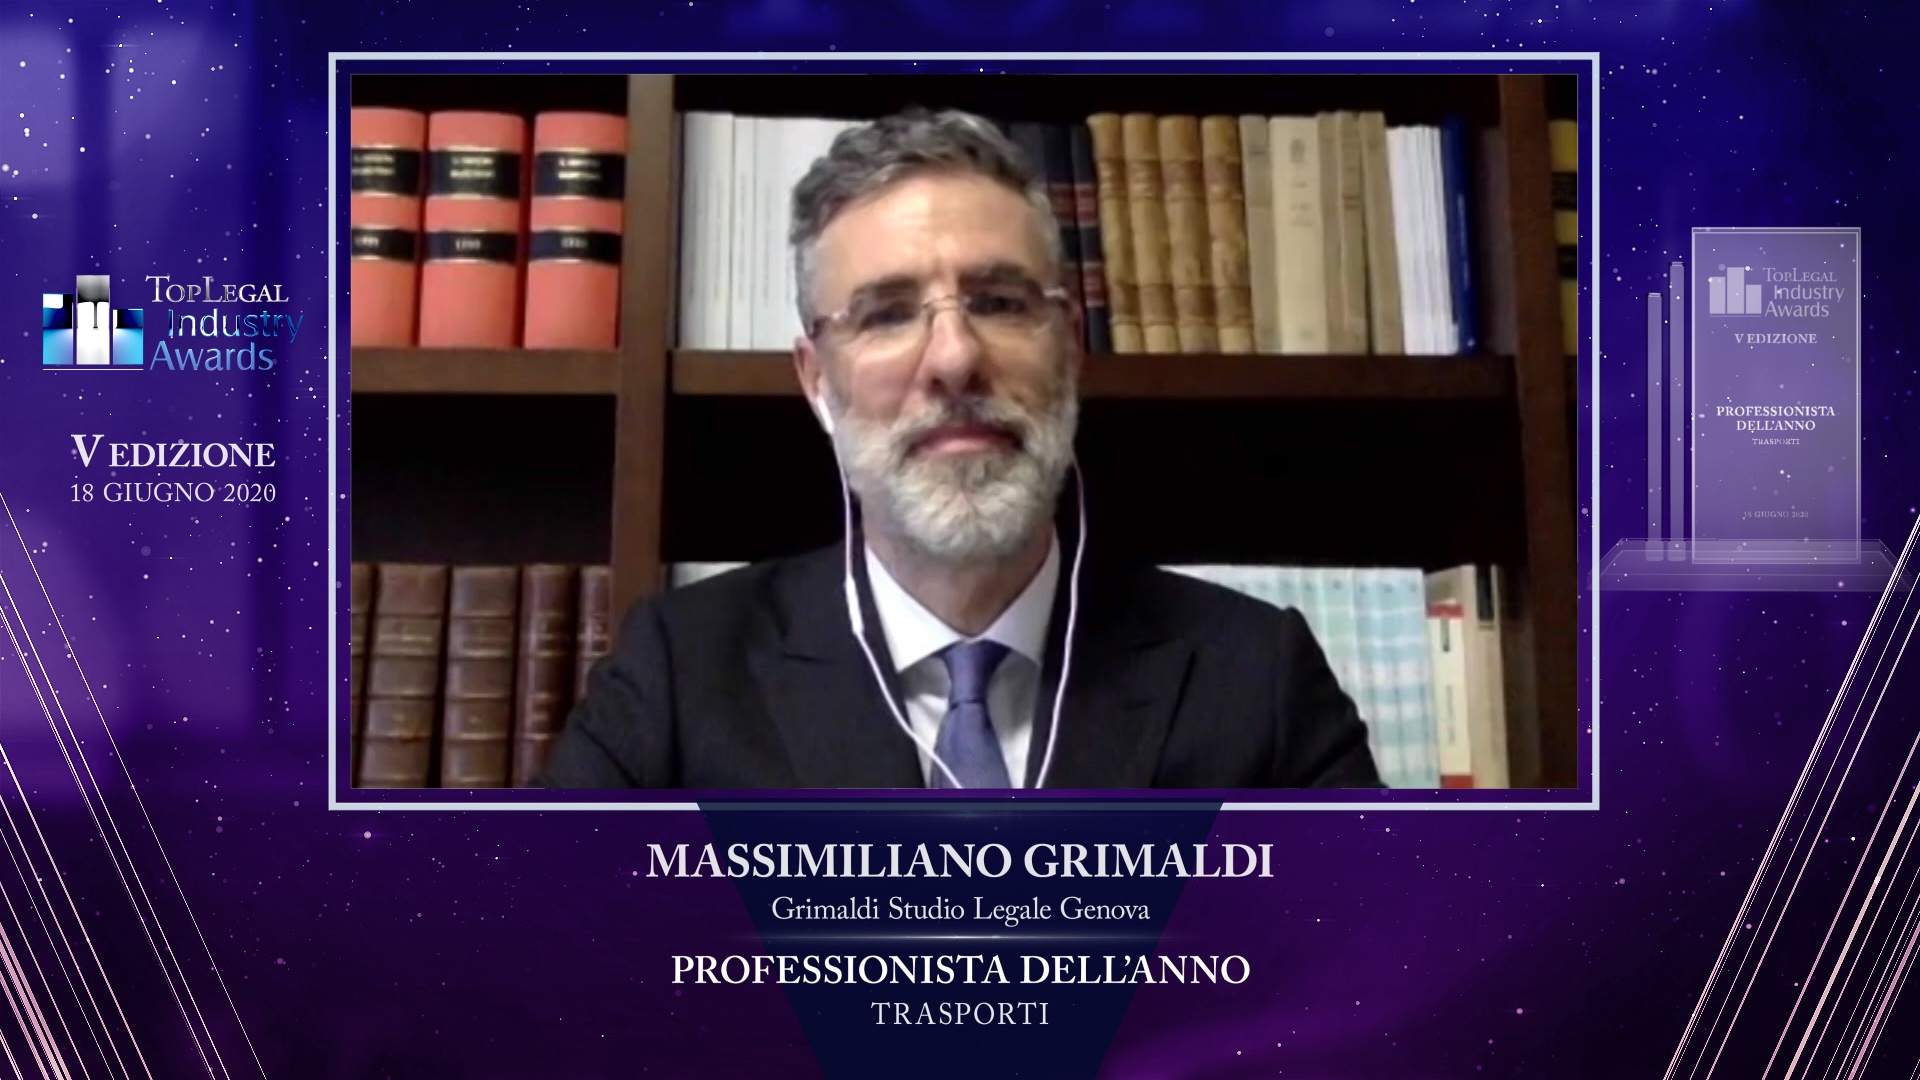 TRASPORTI - MASSIMILIANO GRIMALDI TOP LEGAL INDUSTRY AWARDS 2020